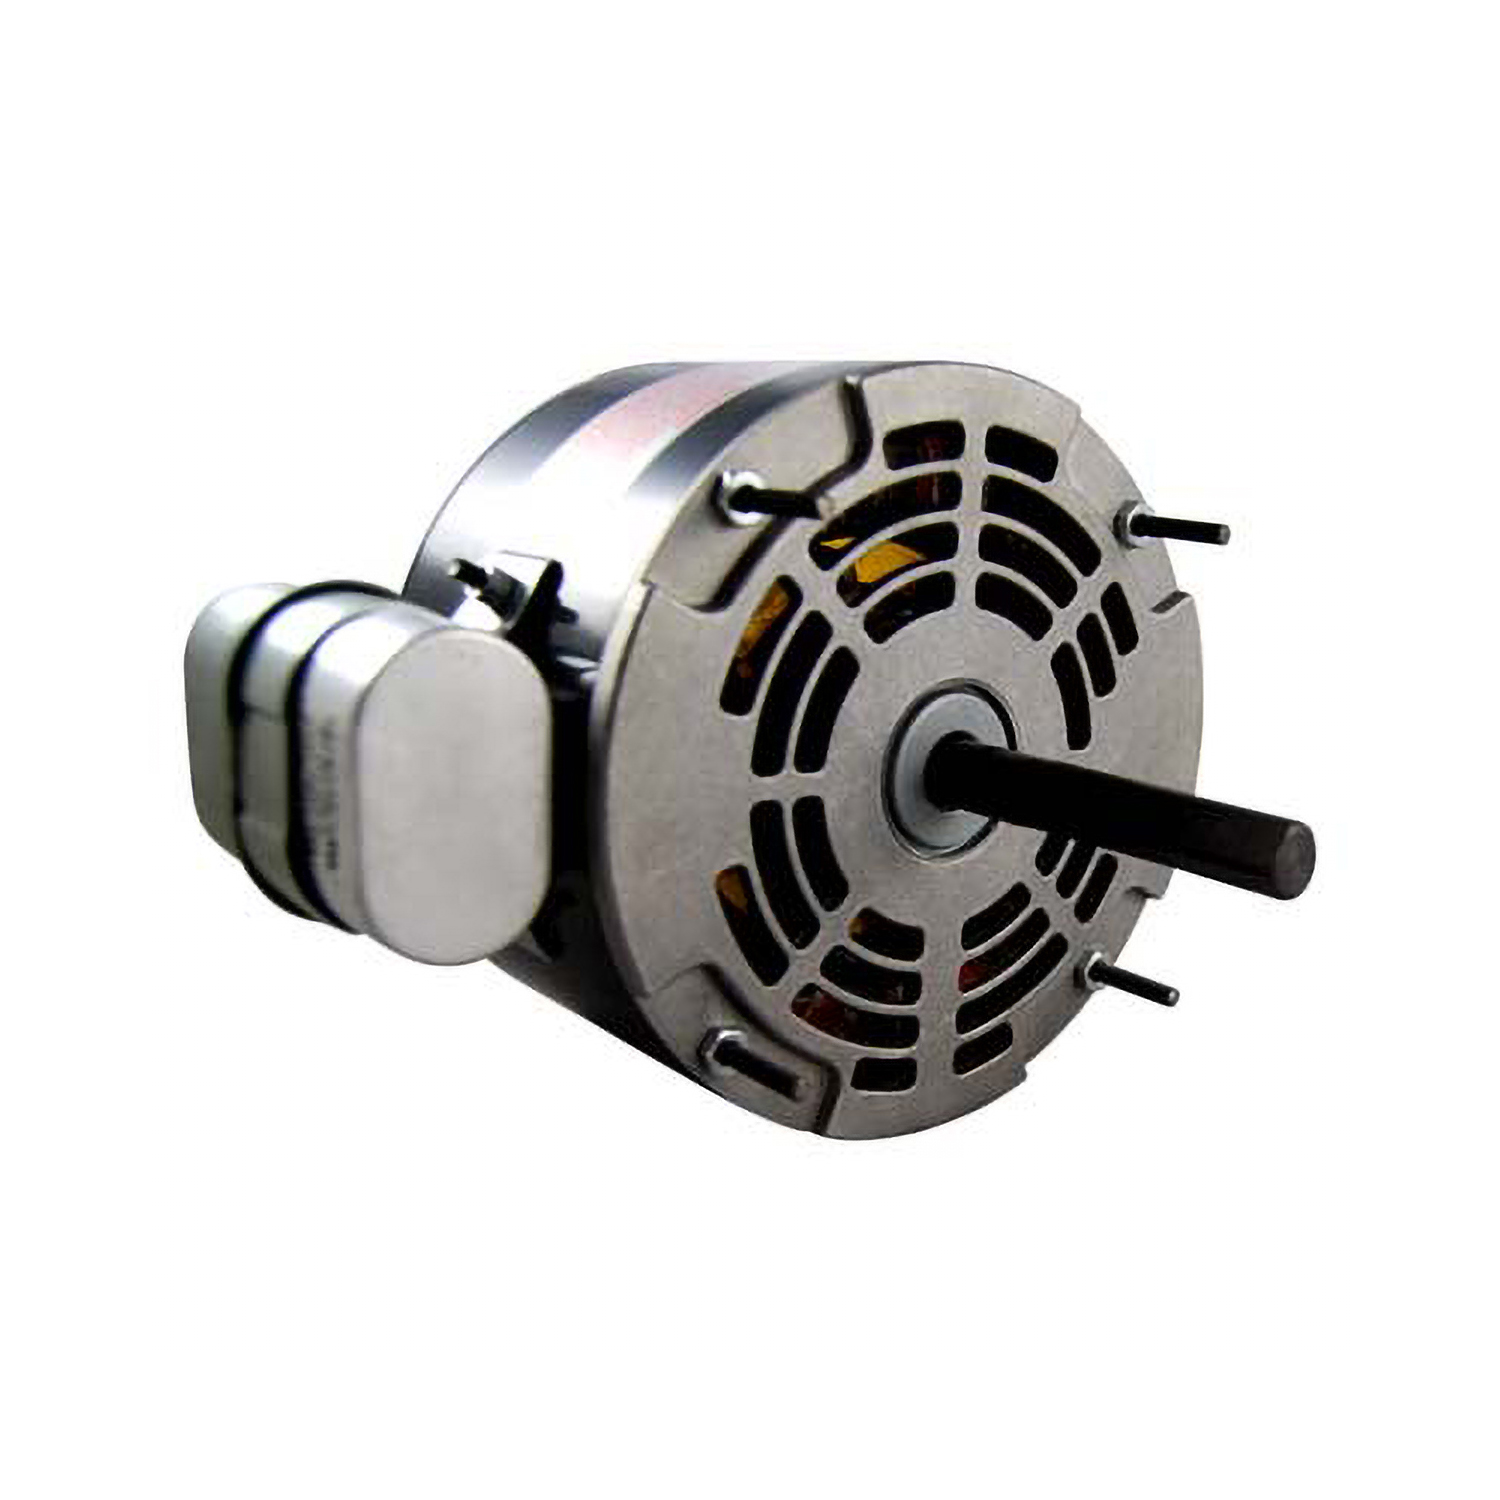 5 5/8" Diameter Motor, 1/6 HP, 208-230 Volt, 1550 RPM